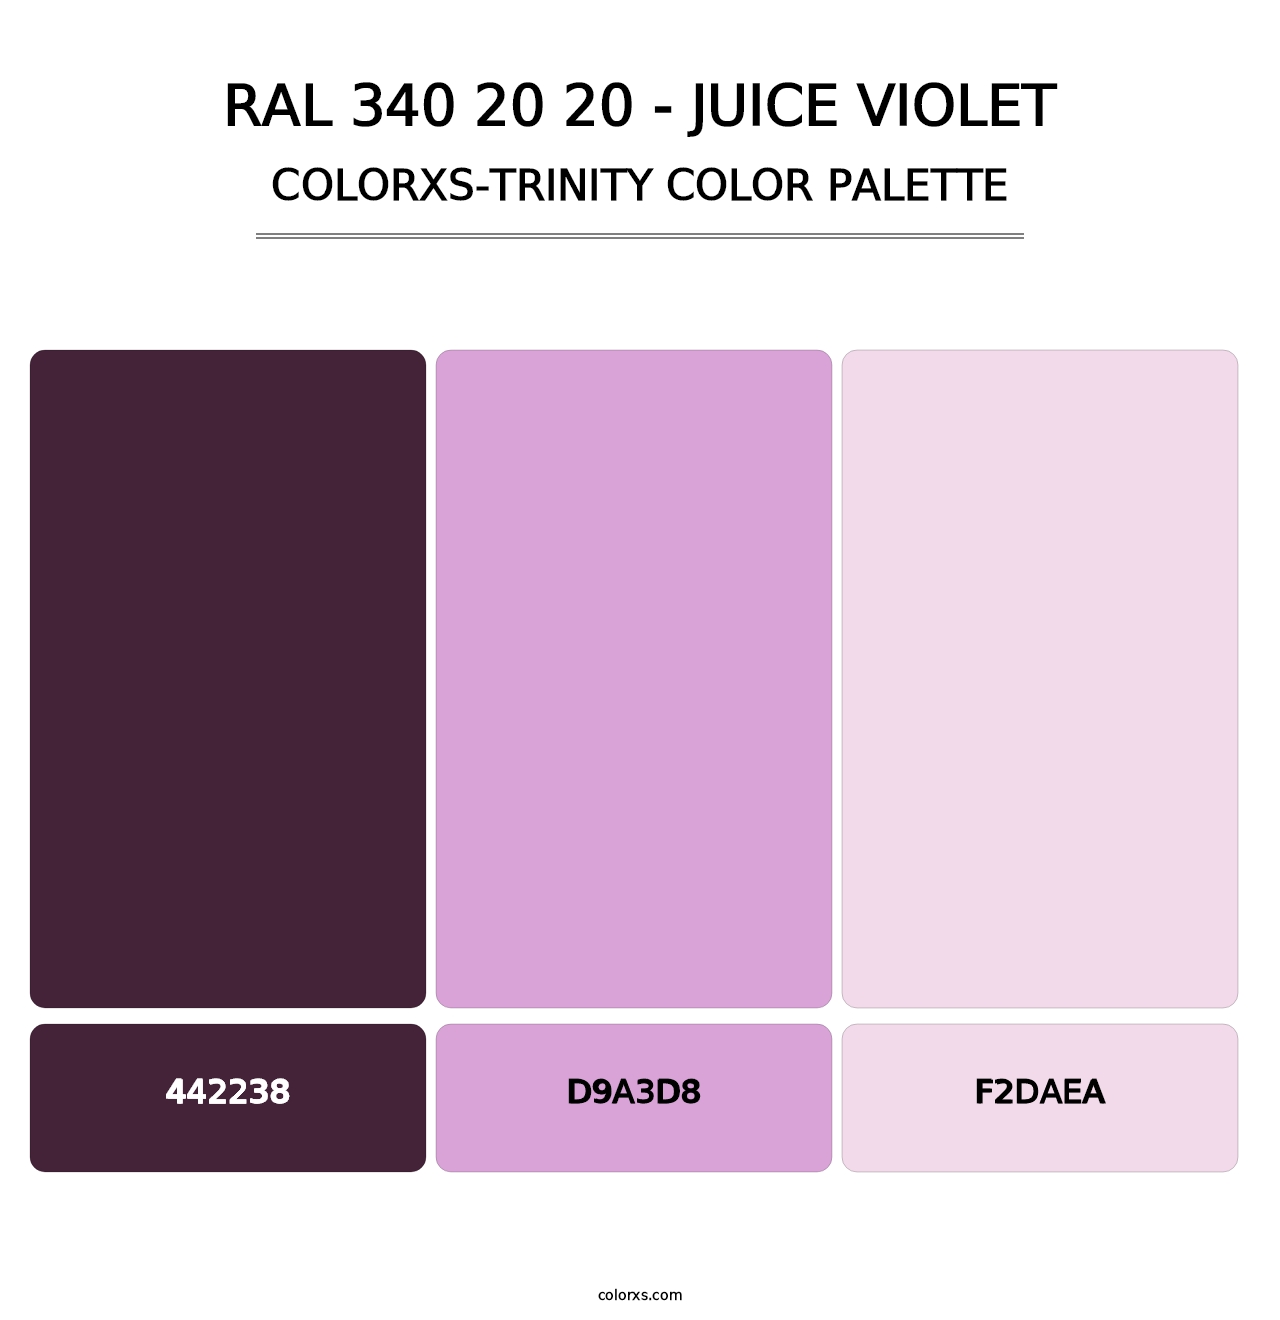 RAL 340 20 20 - Juice Violet - Colorxs Trinity Palette